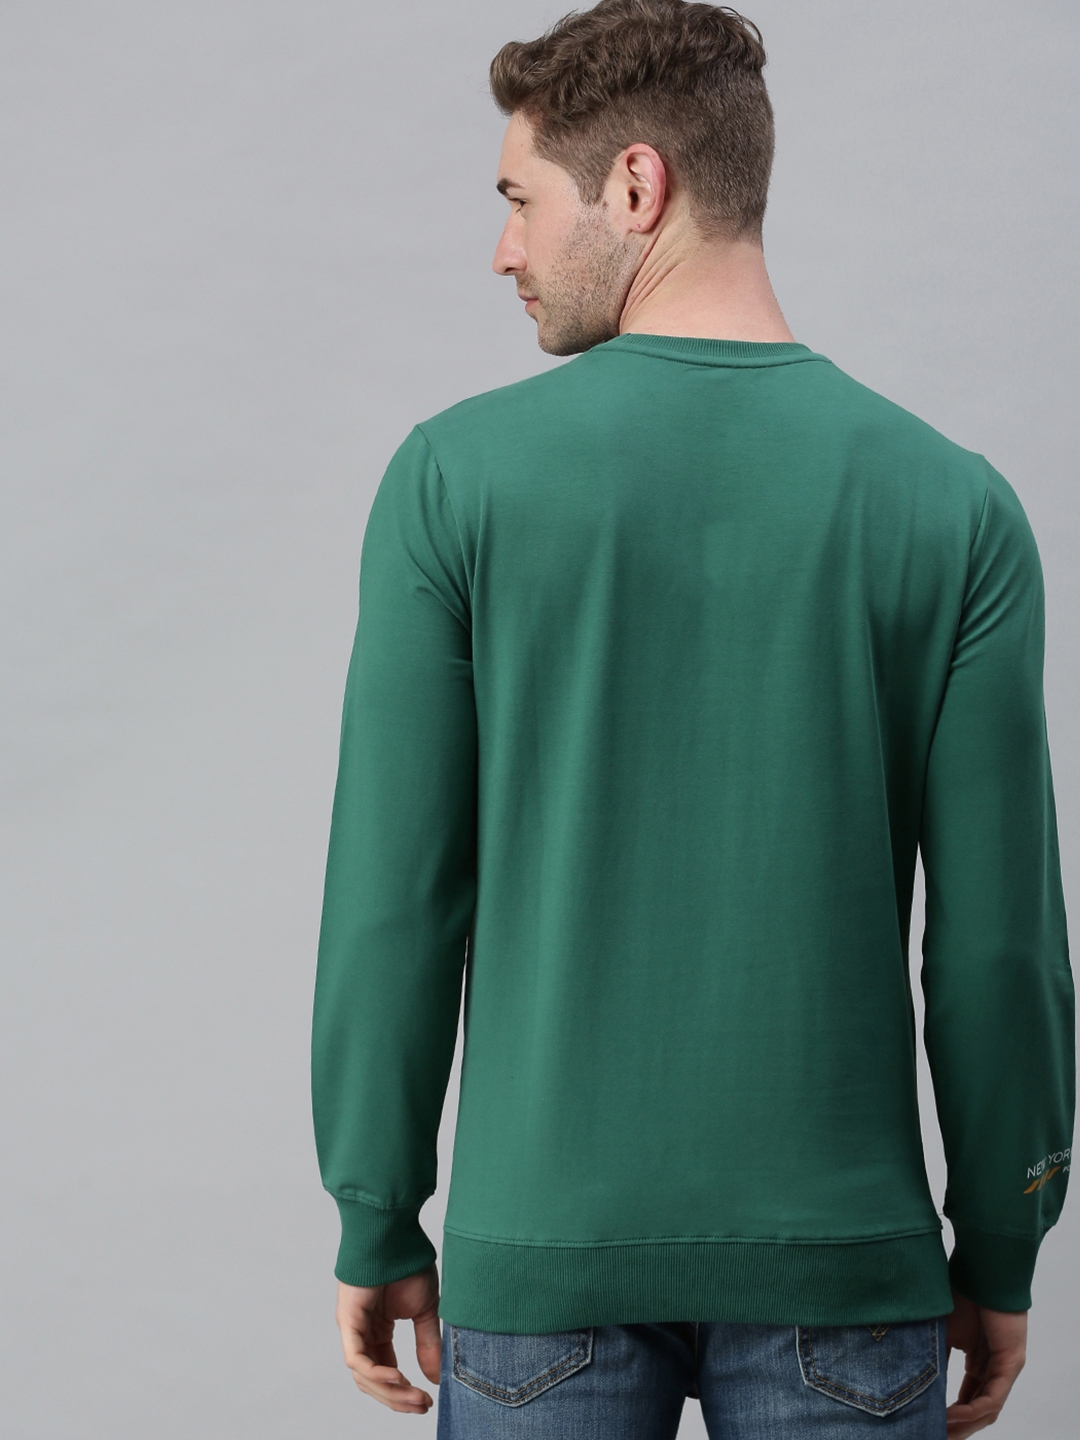 Men's Green Cotton Blend Printed Sweatshirts